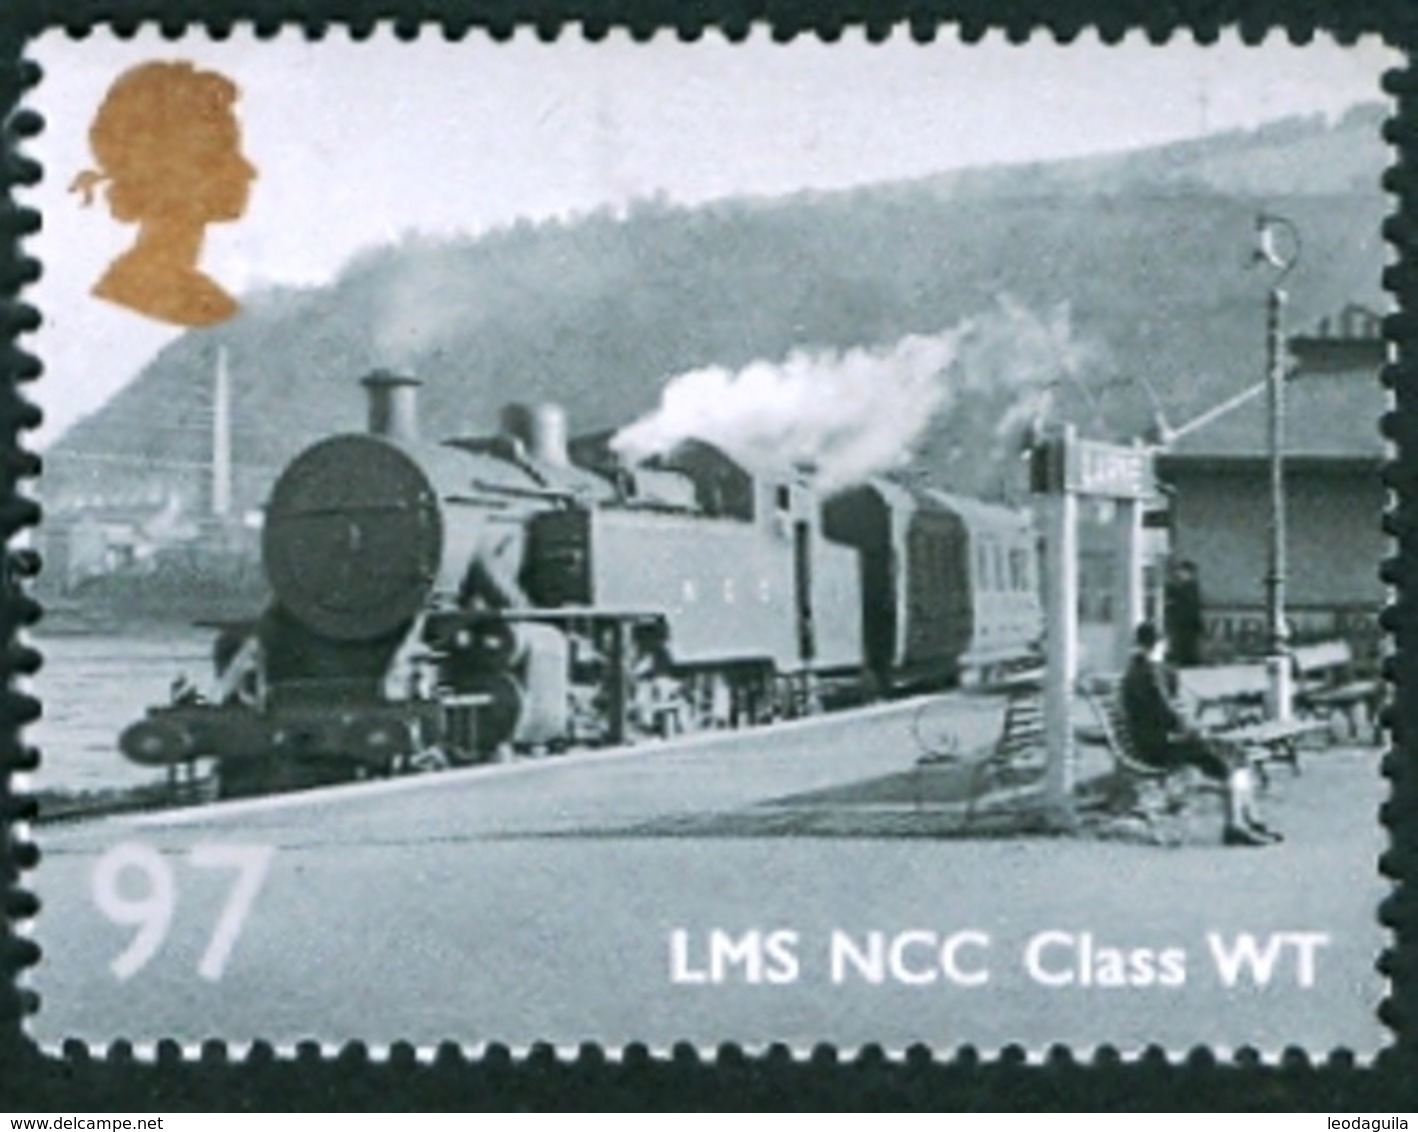 GREAT BRITAIN #3113  -  GREAT BRITISH RAILWAYS - LOCOMOTIVE  LMS NCC CLASS WT 97   - 2010 - Unused Stamps